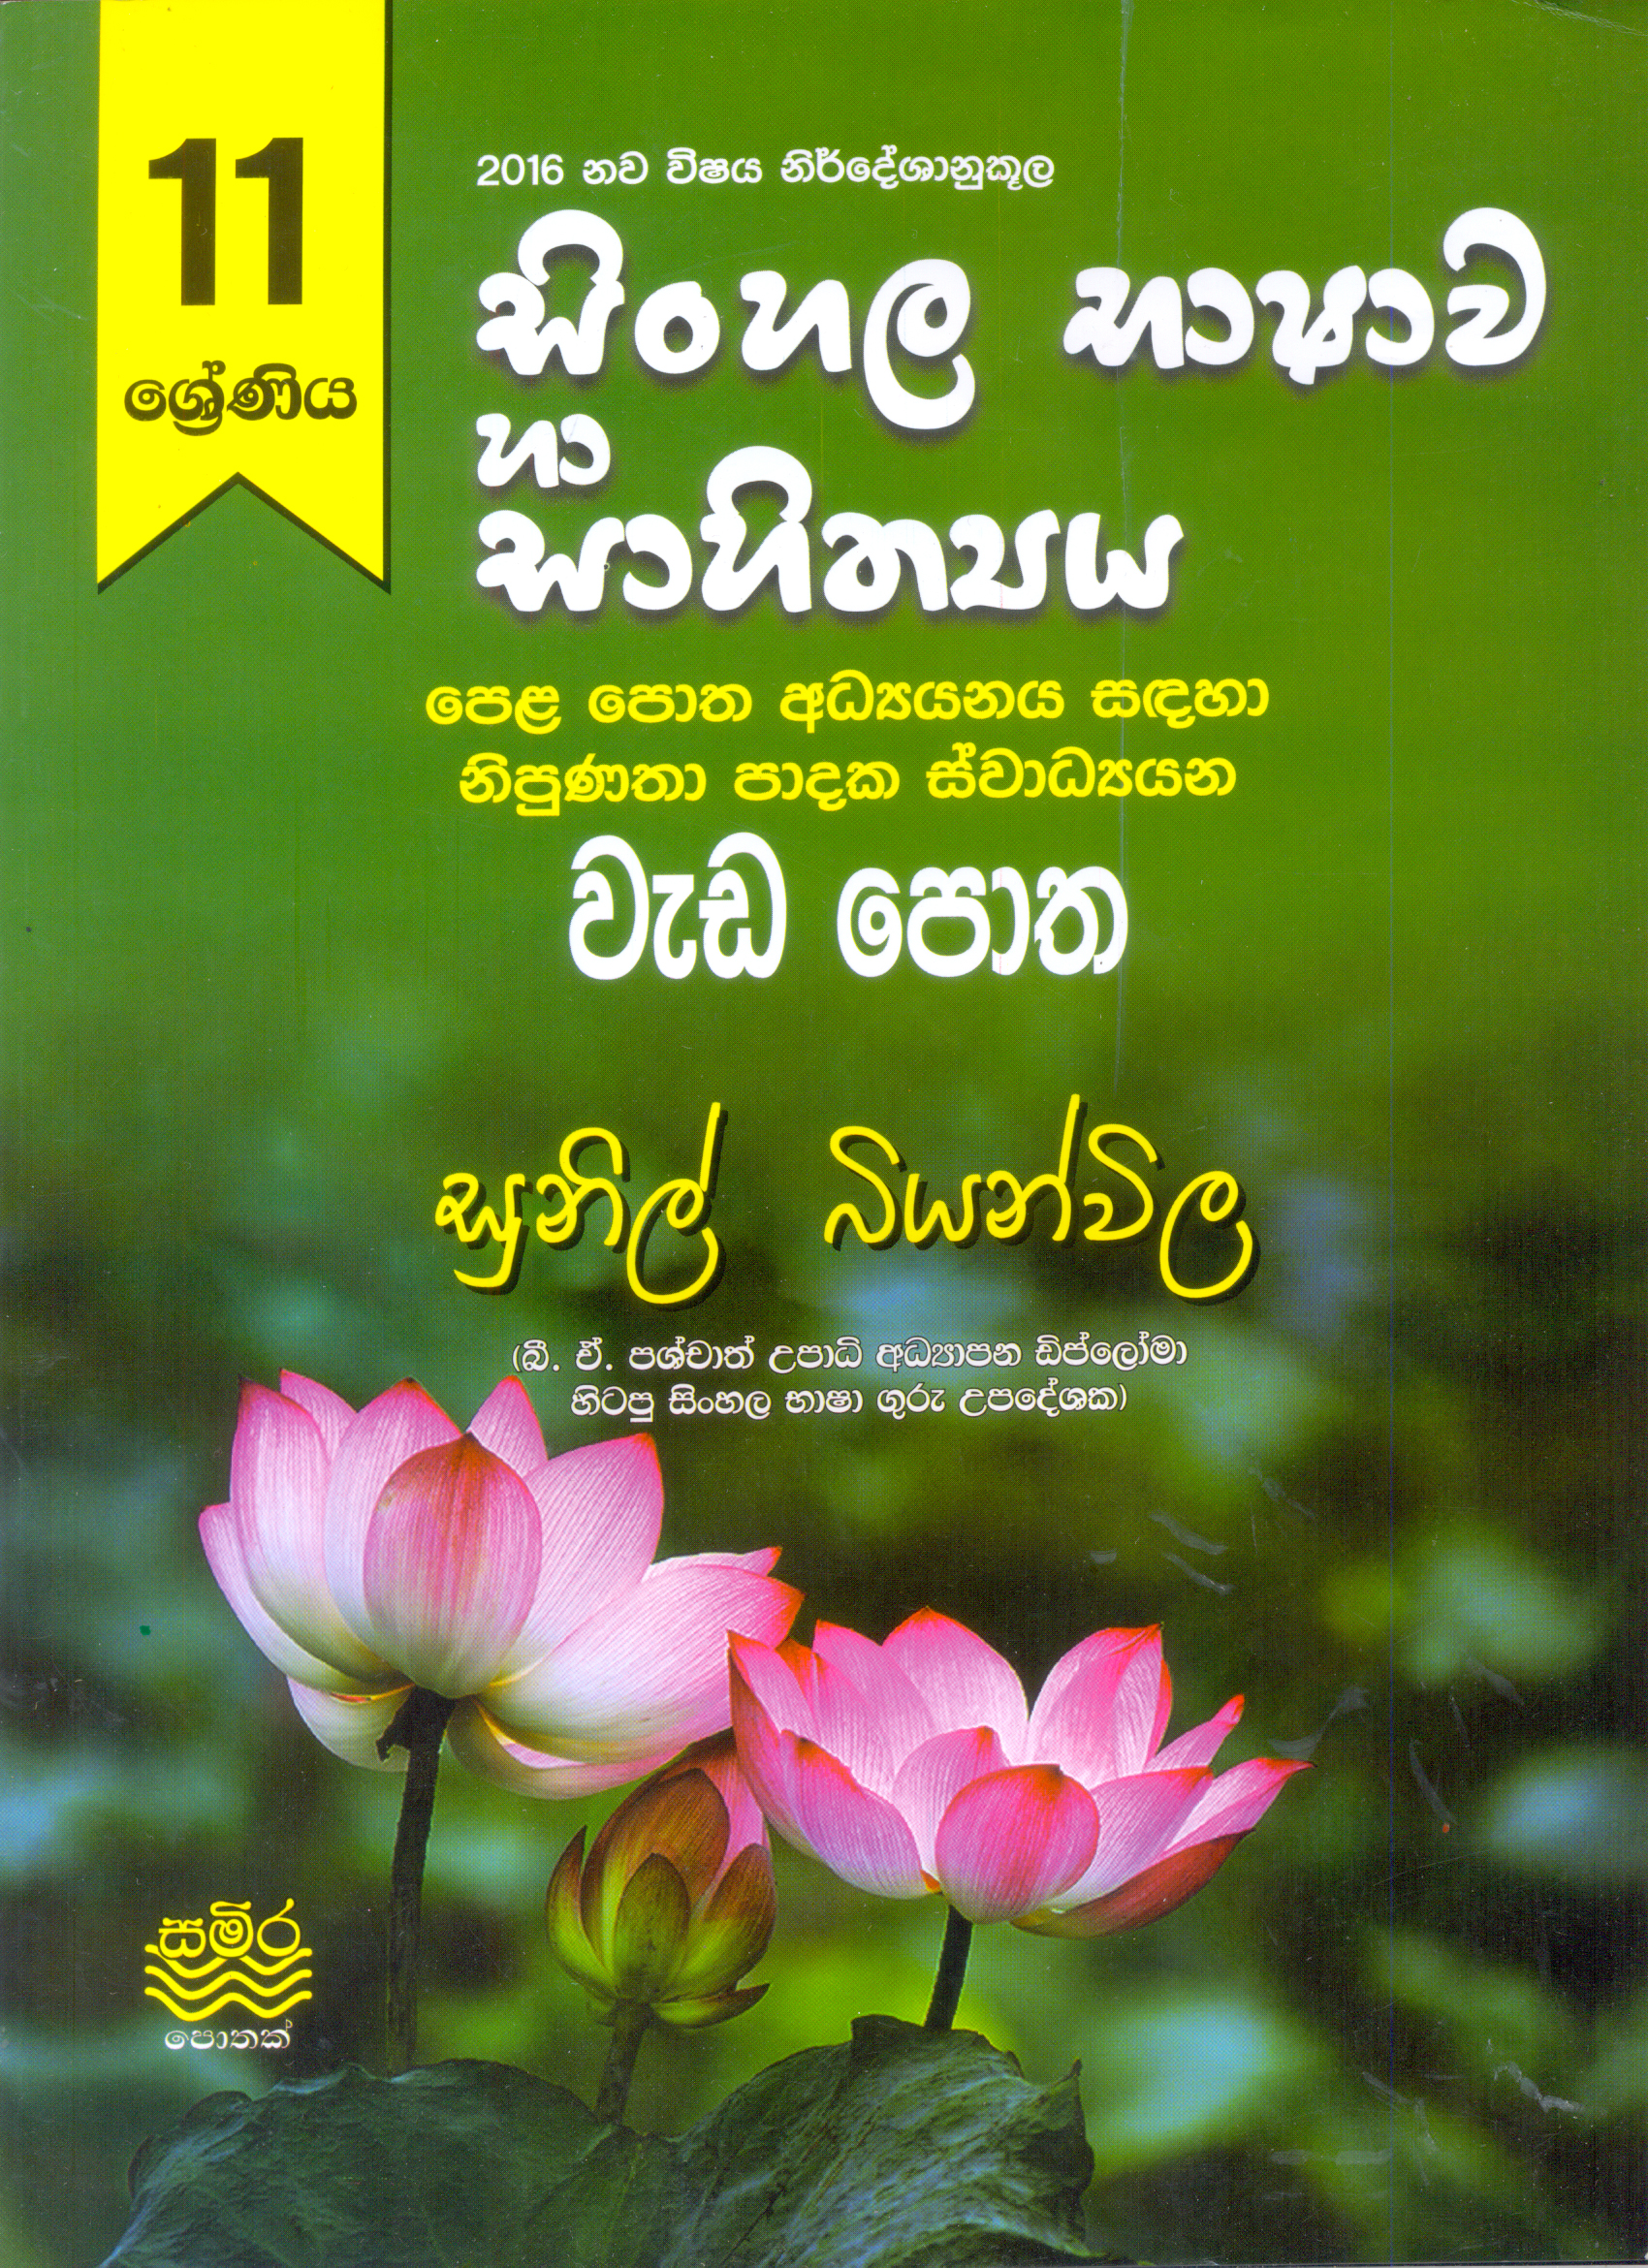 11 Shreniya Sinhala Bhashawa Ha Sahithyaya Wada potha (2016 Nawa Nirdeshaya)